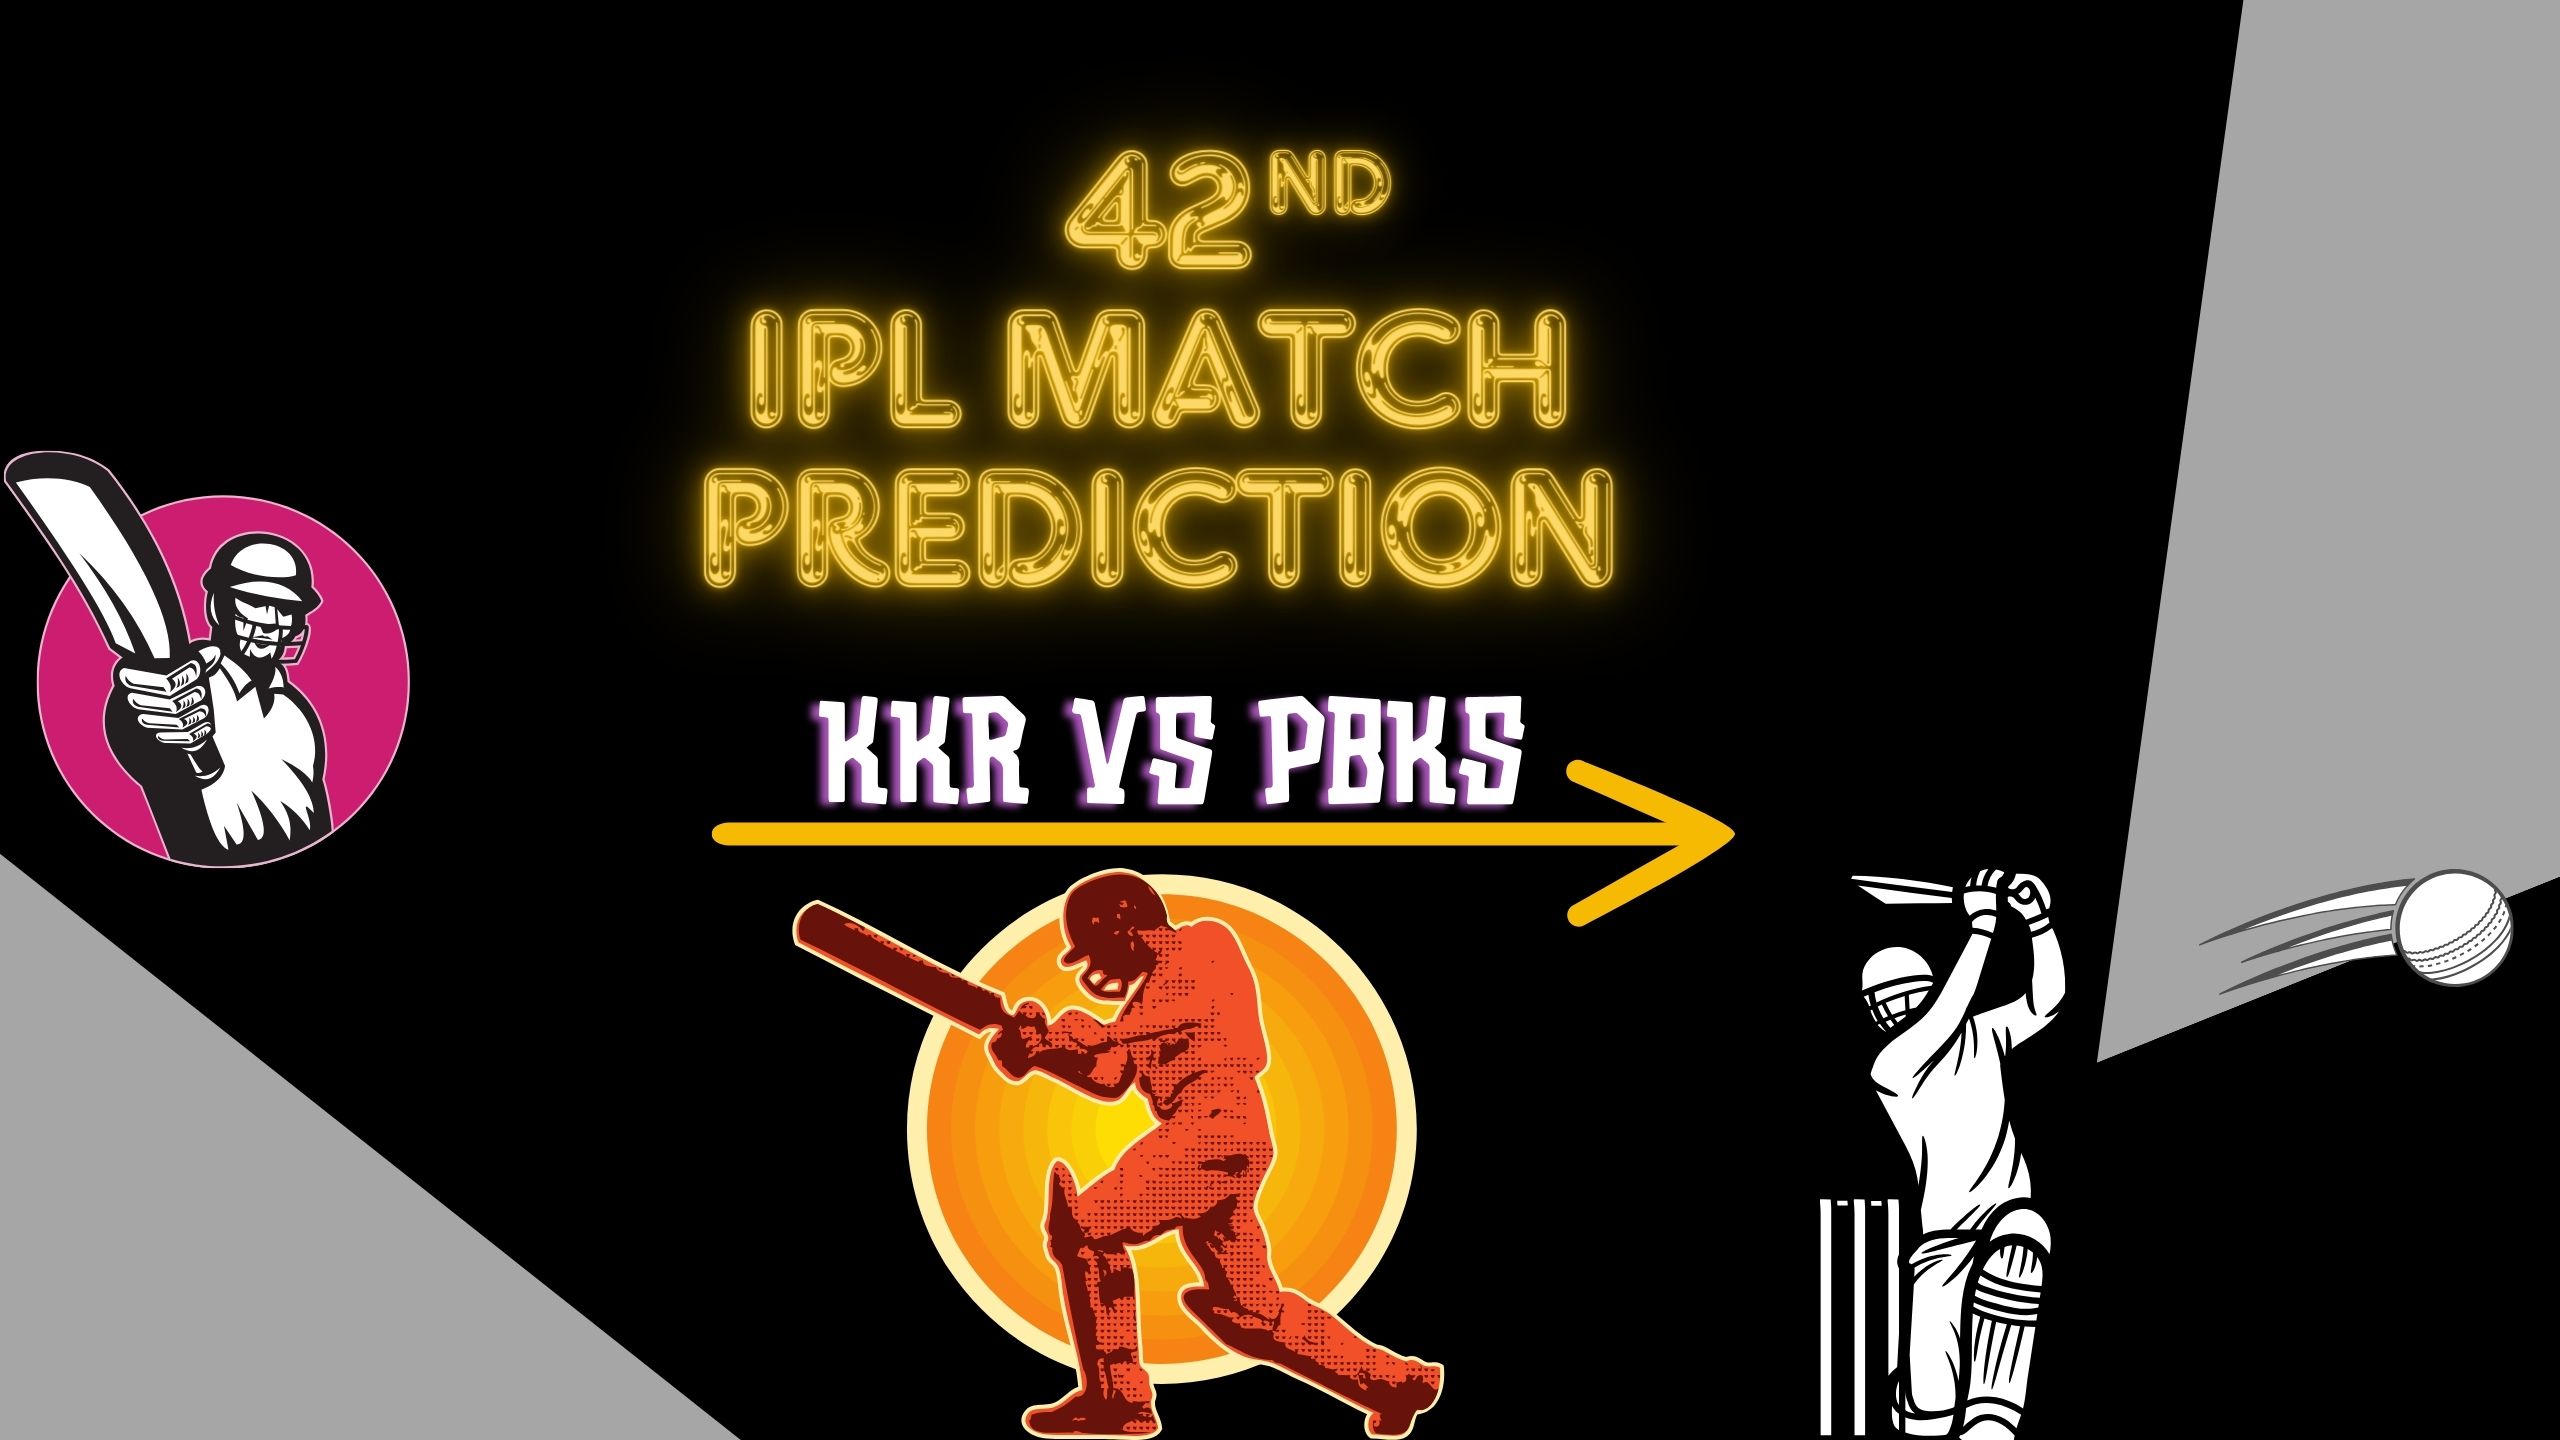 Dream11 KKR vs PBKS | IPL 42nd Match Prediction